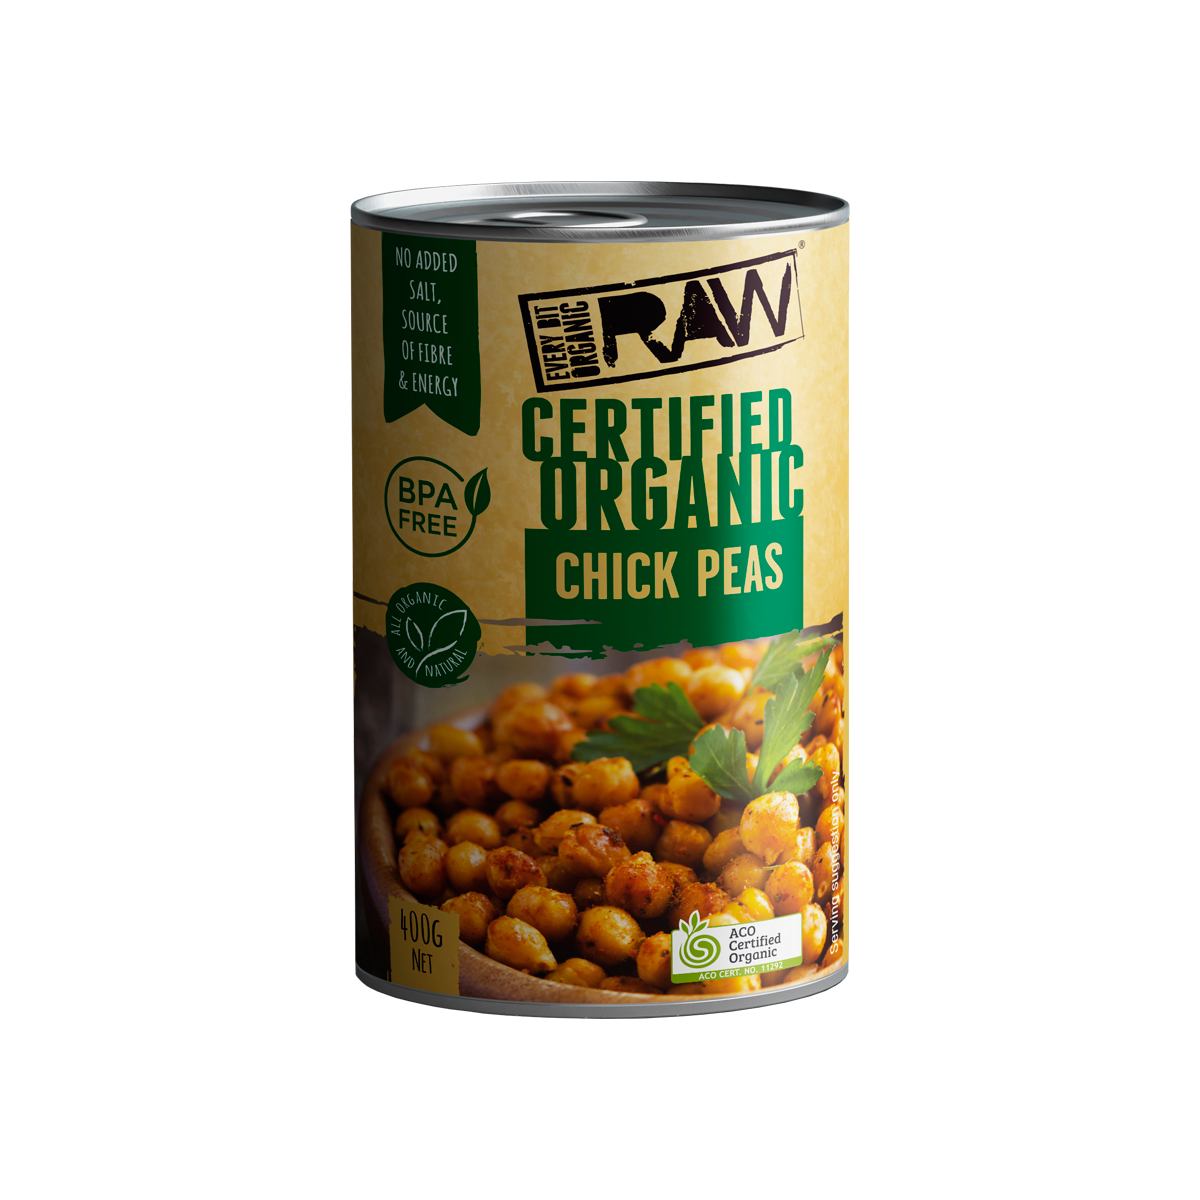 Every Bit Organic Chick Peas 400g